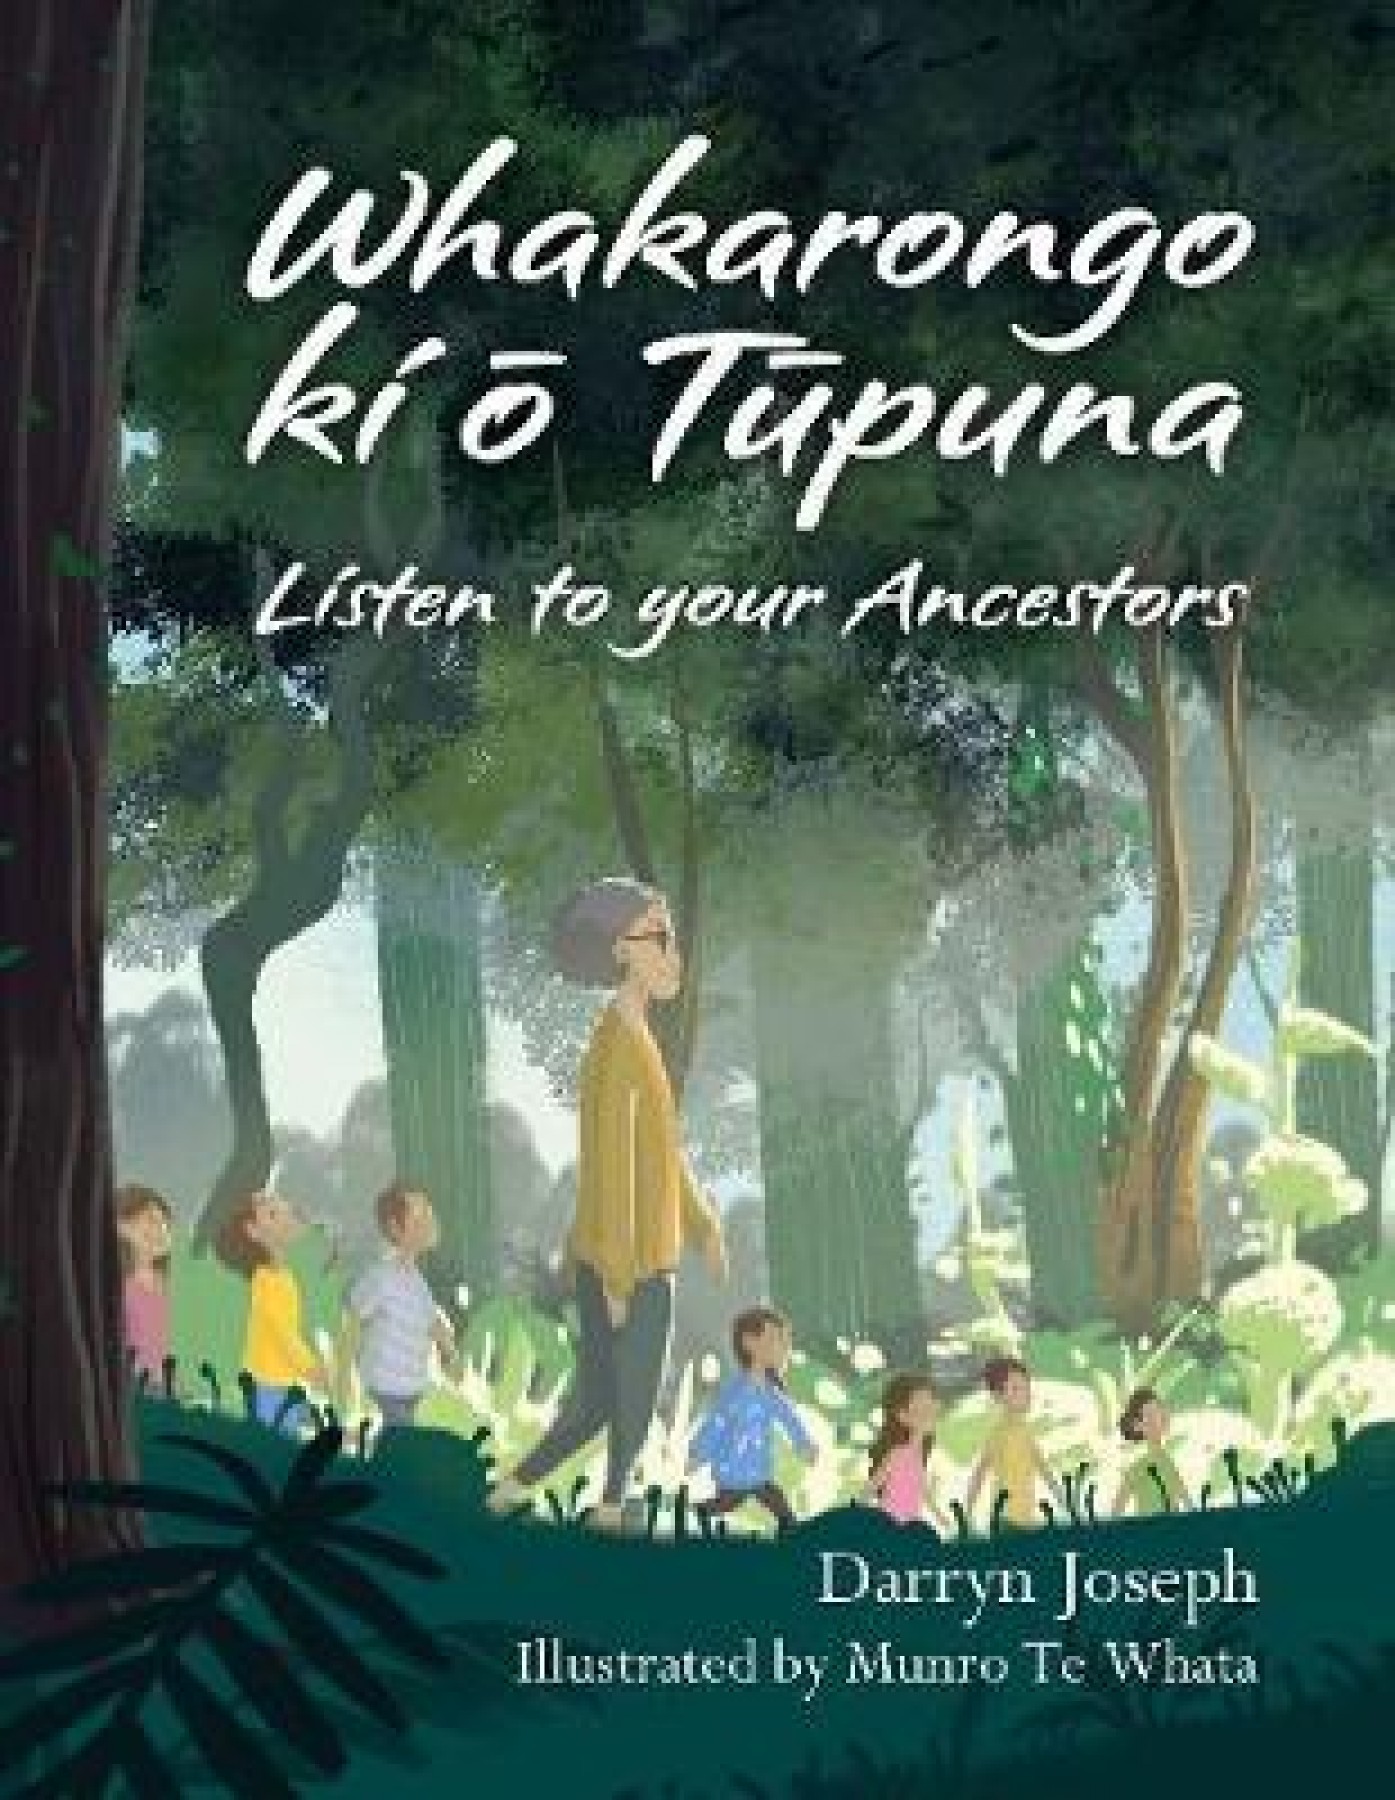 Whakarongo ki ō tūpuna: Listen to your ancestors